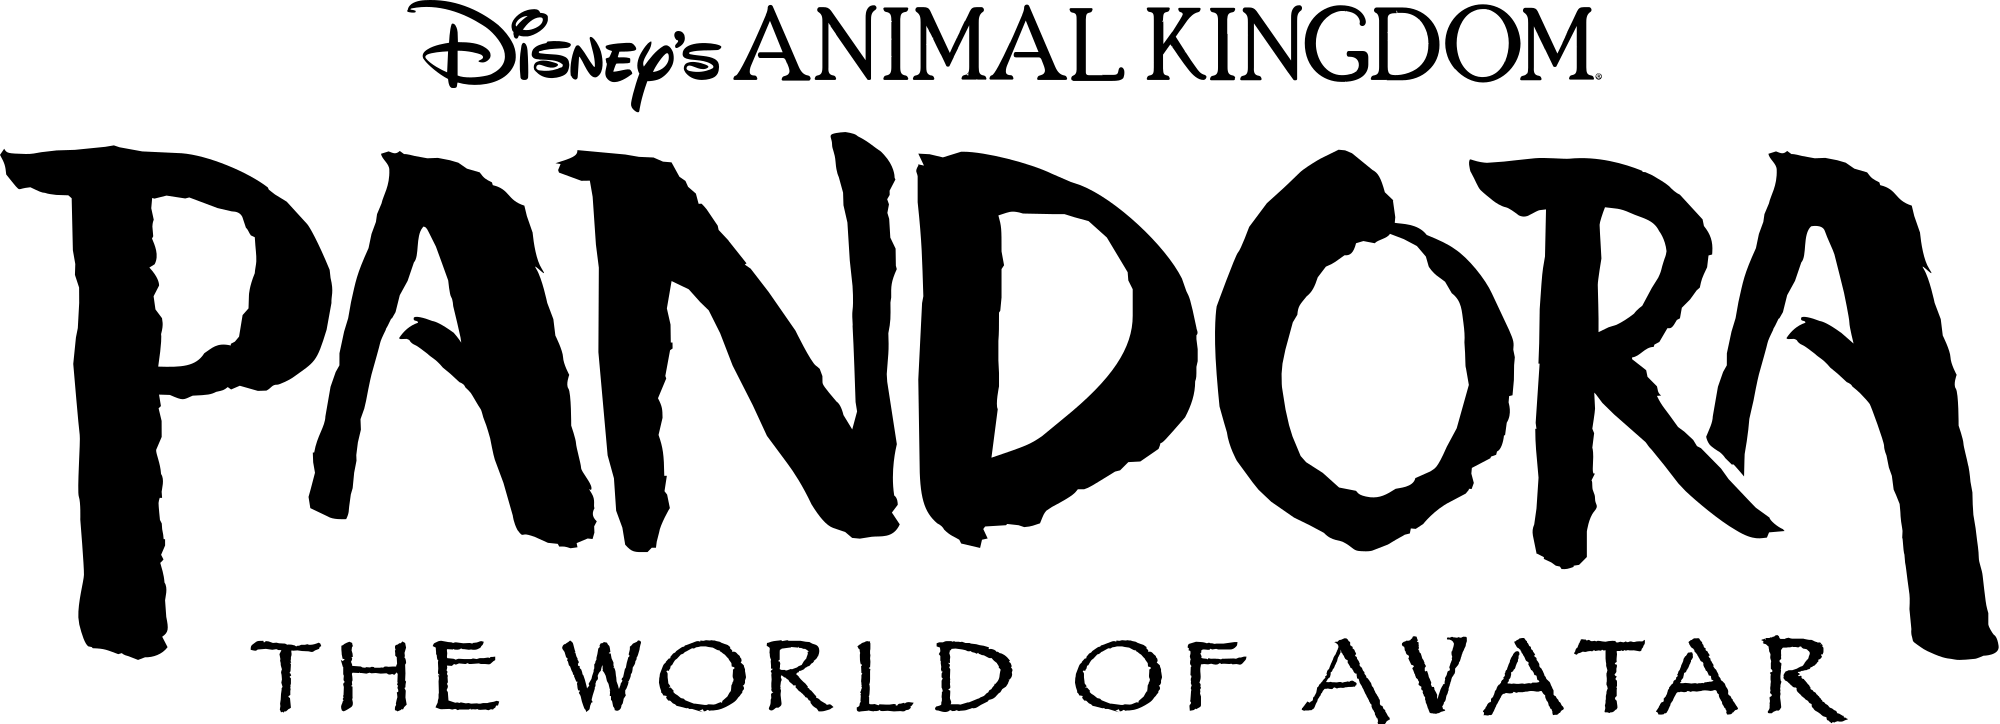 Pandora Logo - File:Pandora logo black with Disney's Animal Kingdom.svg - Wikimedia ...